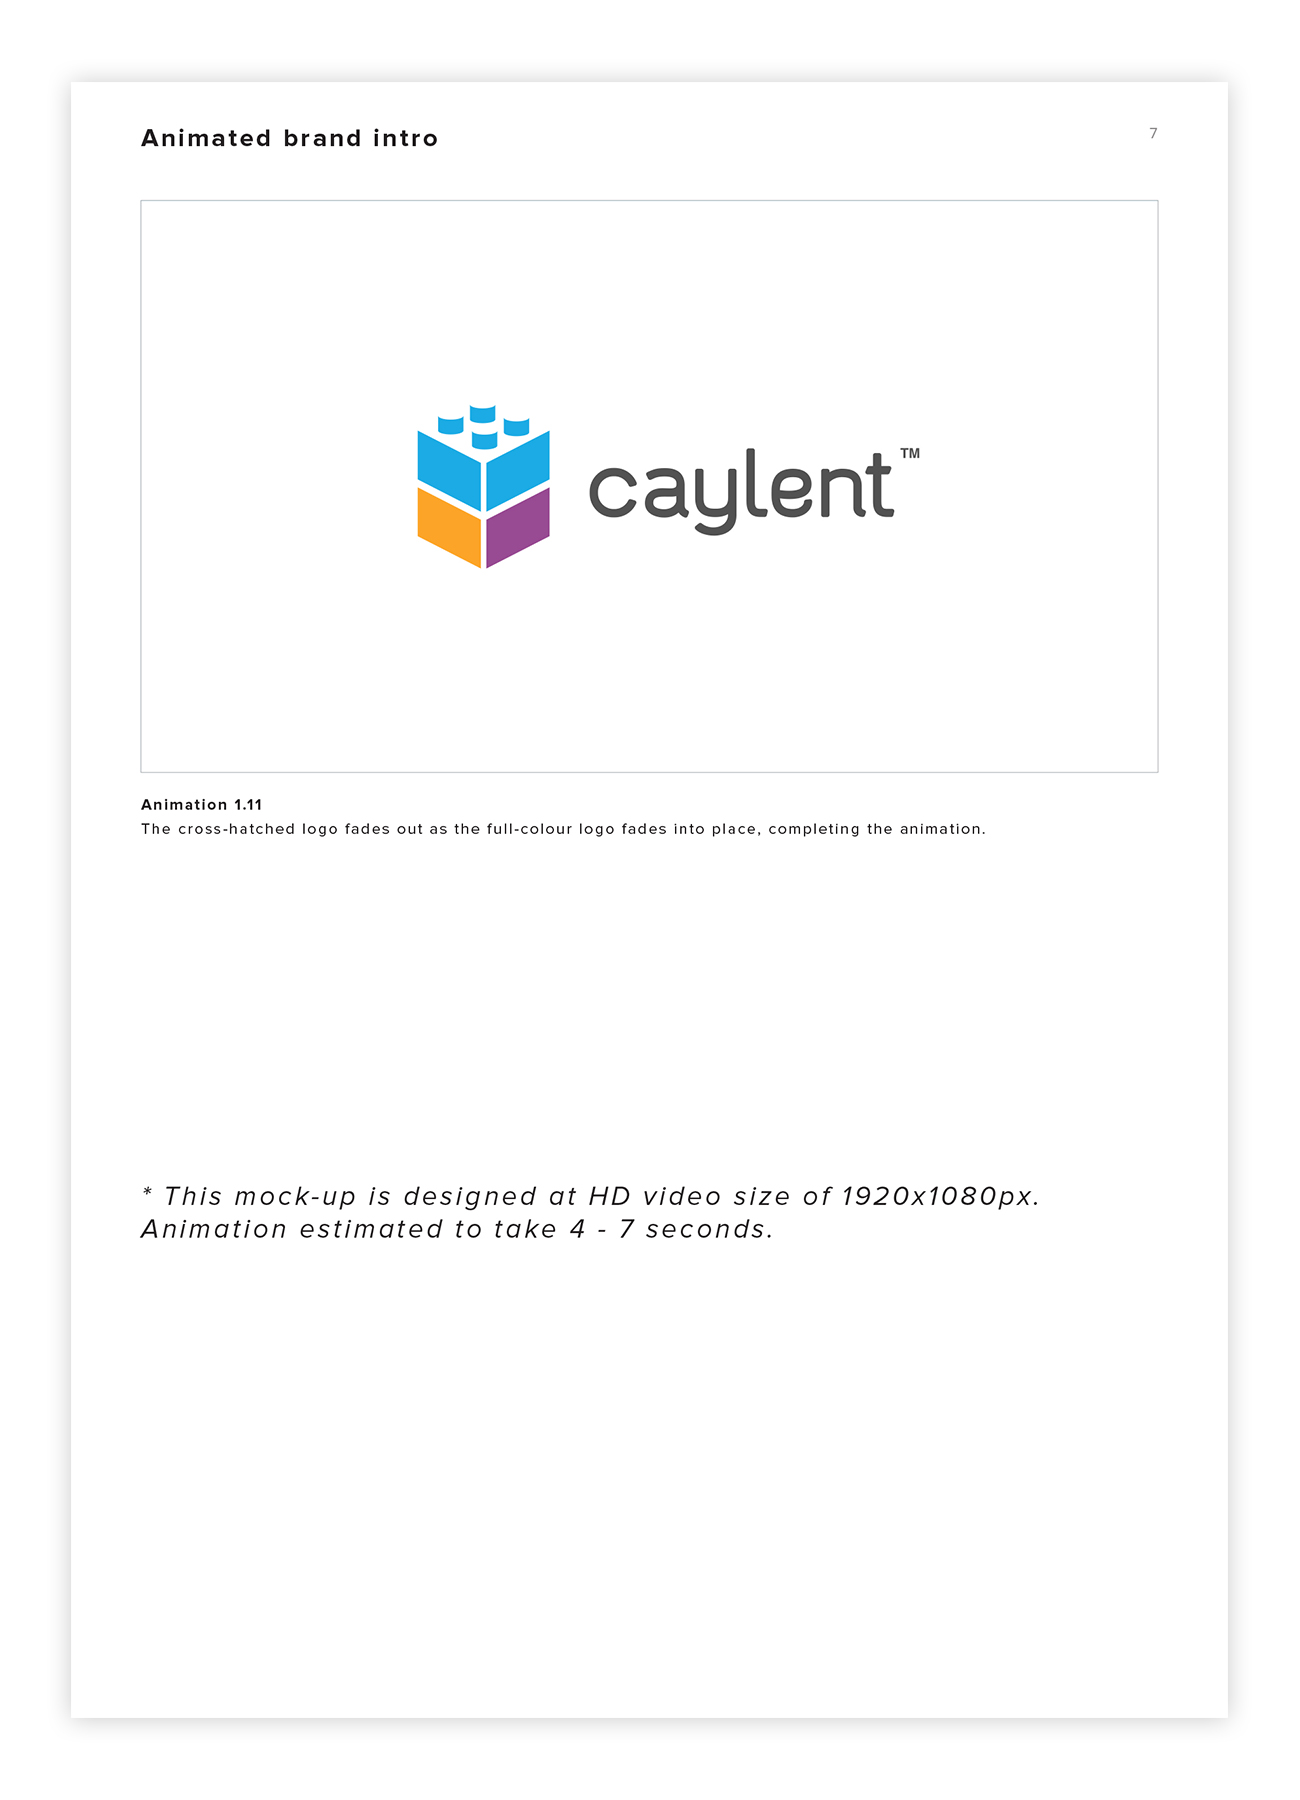 Caylent_Animated_Brand_Intro_Presentation.6.jpg